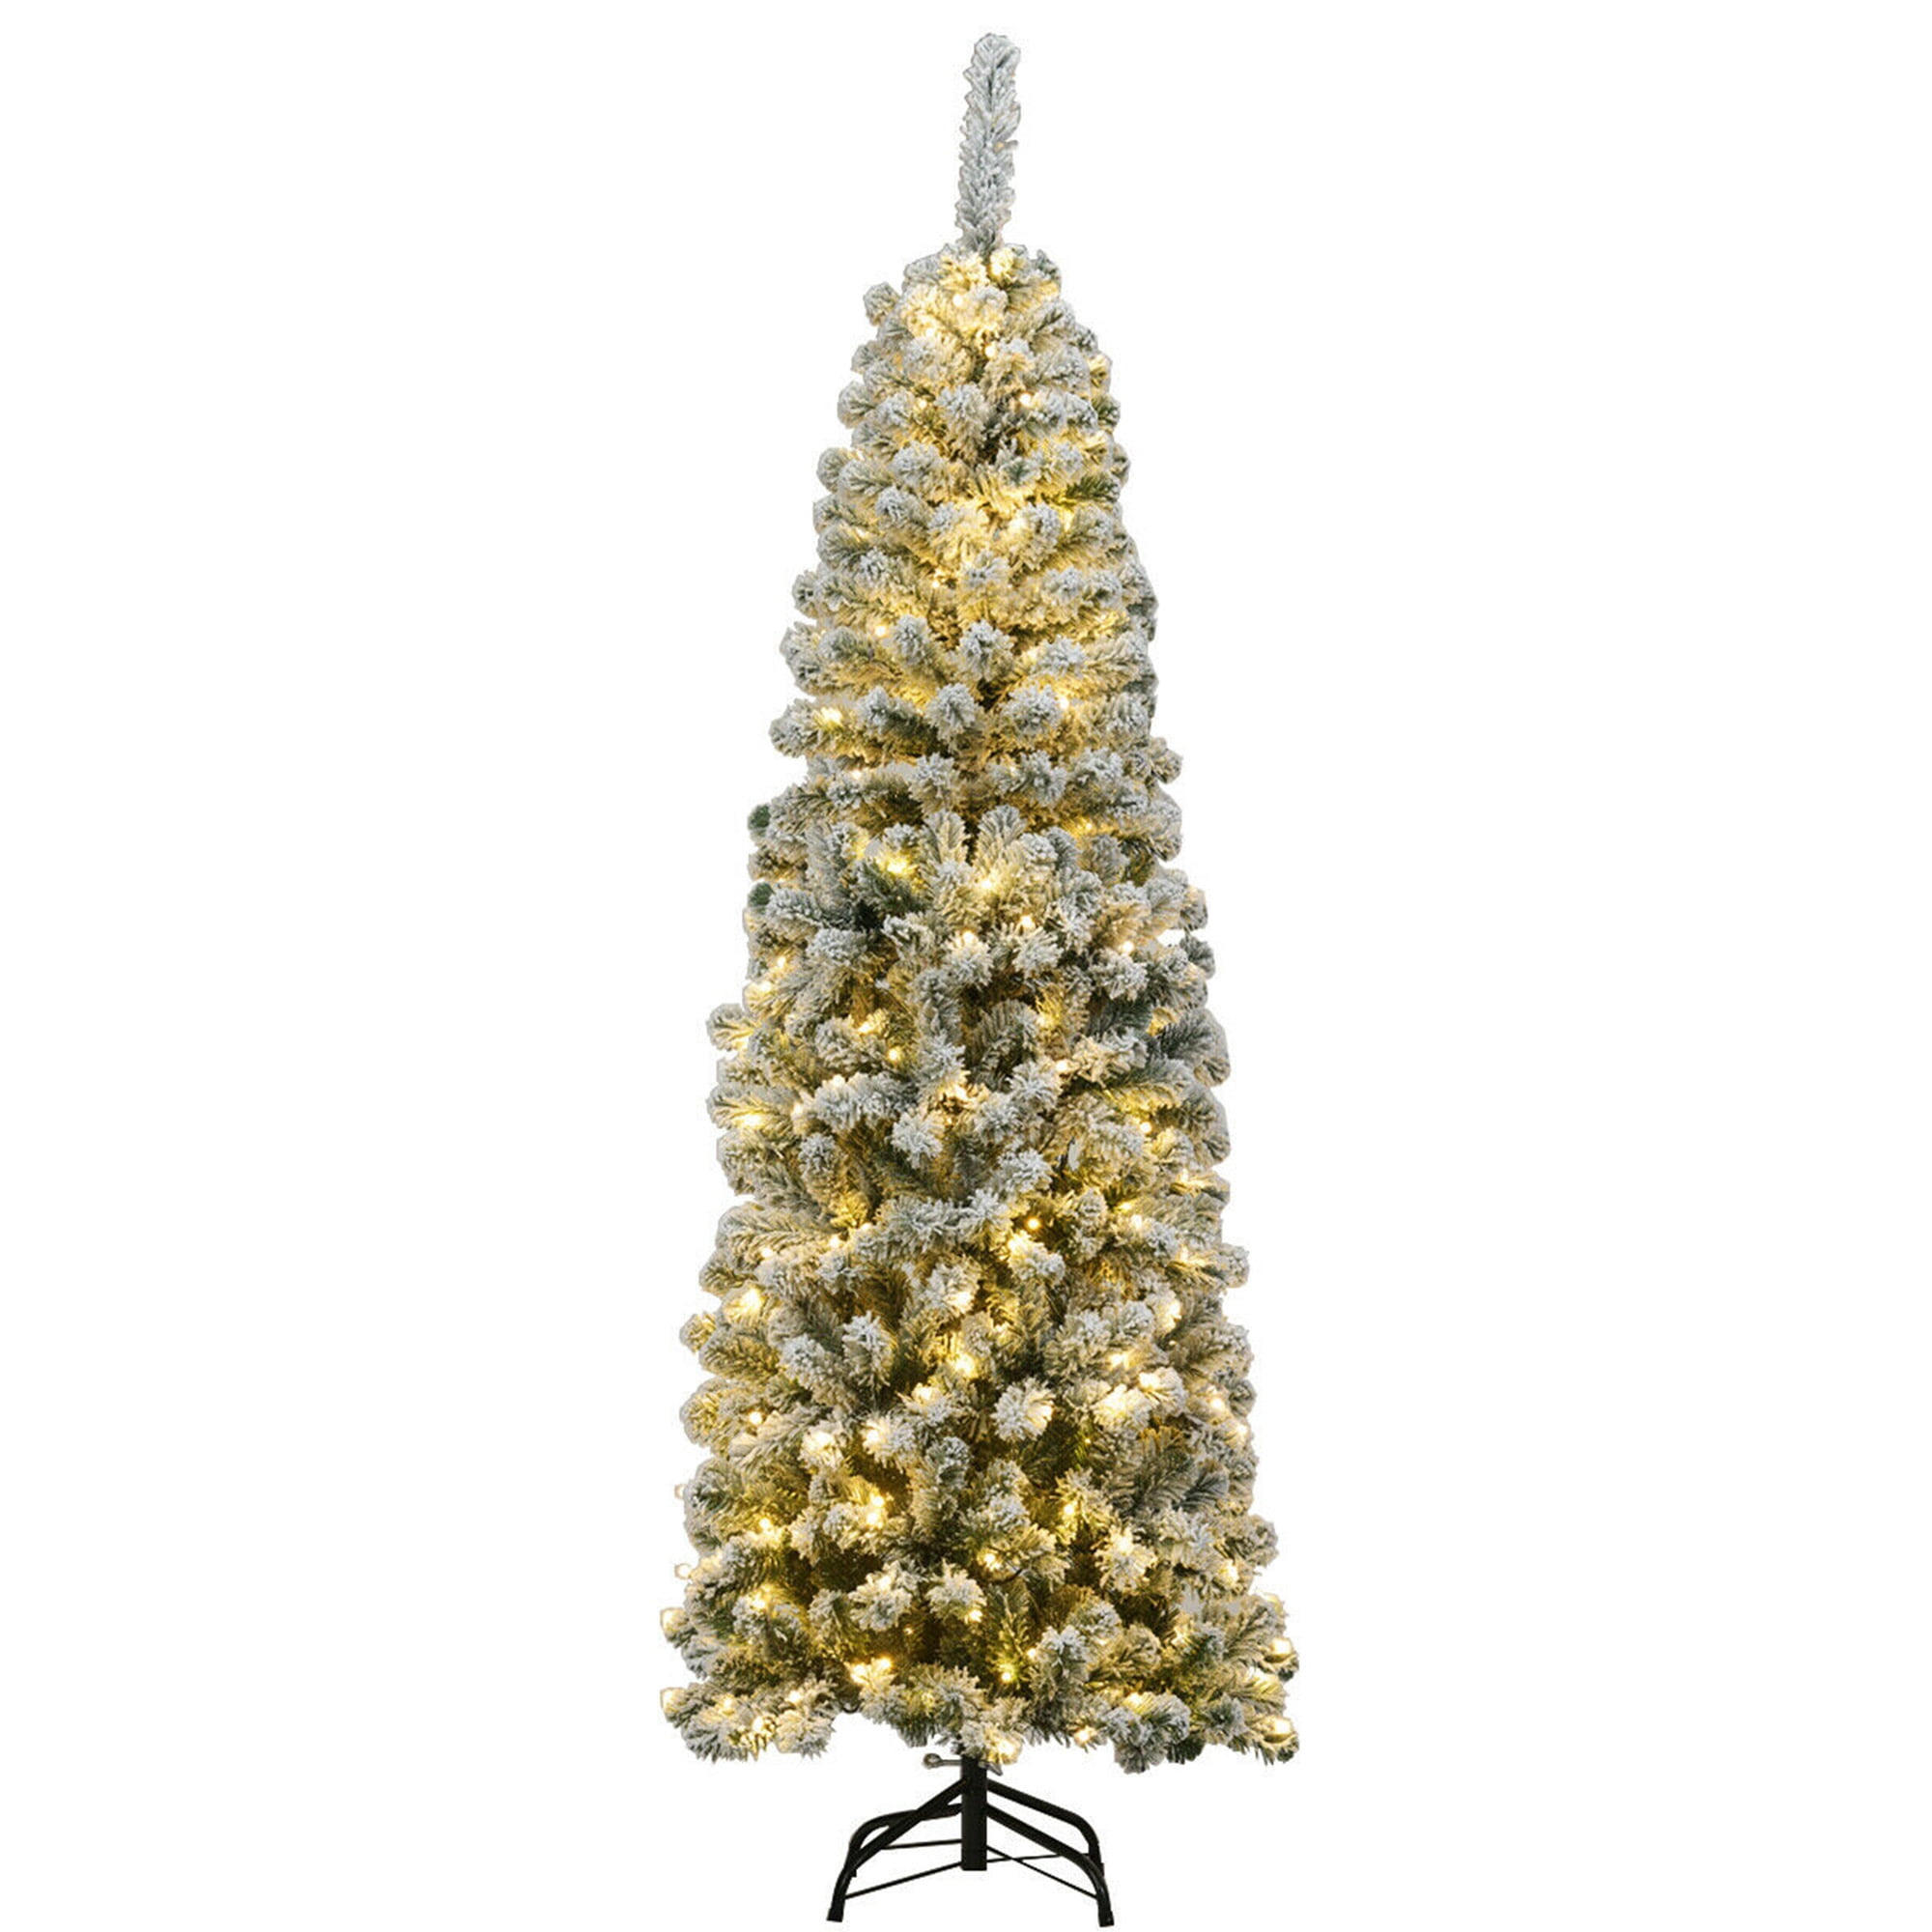 Wovilon Christmas Ball Ornaments - 36pcs Shatterproof Plastic